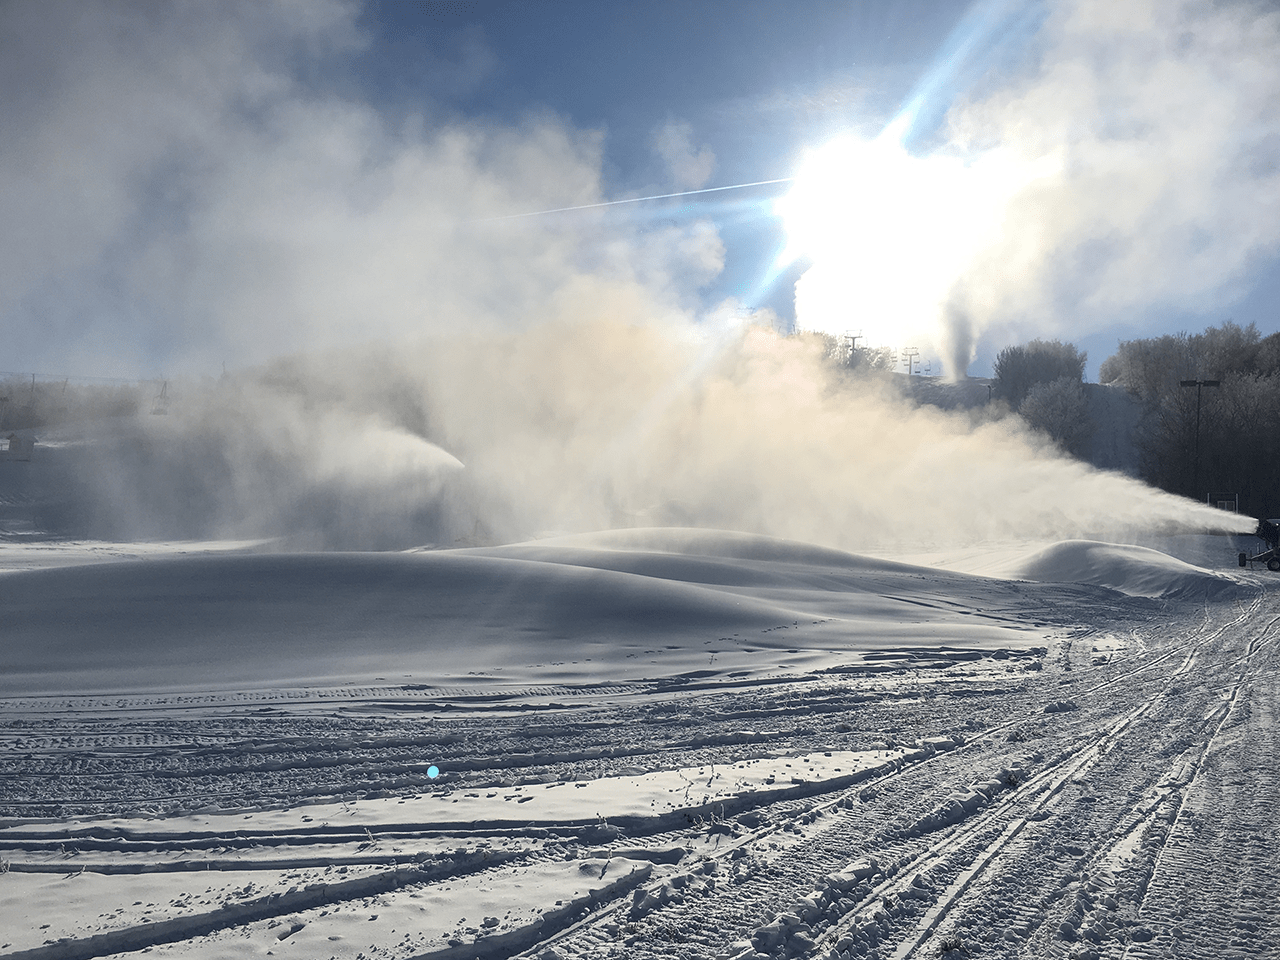 Canada's winter survival secret: Pass the Sortilege - Craigslegz